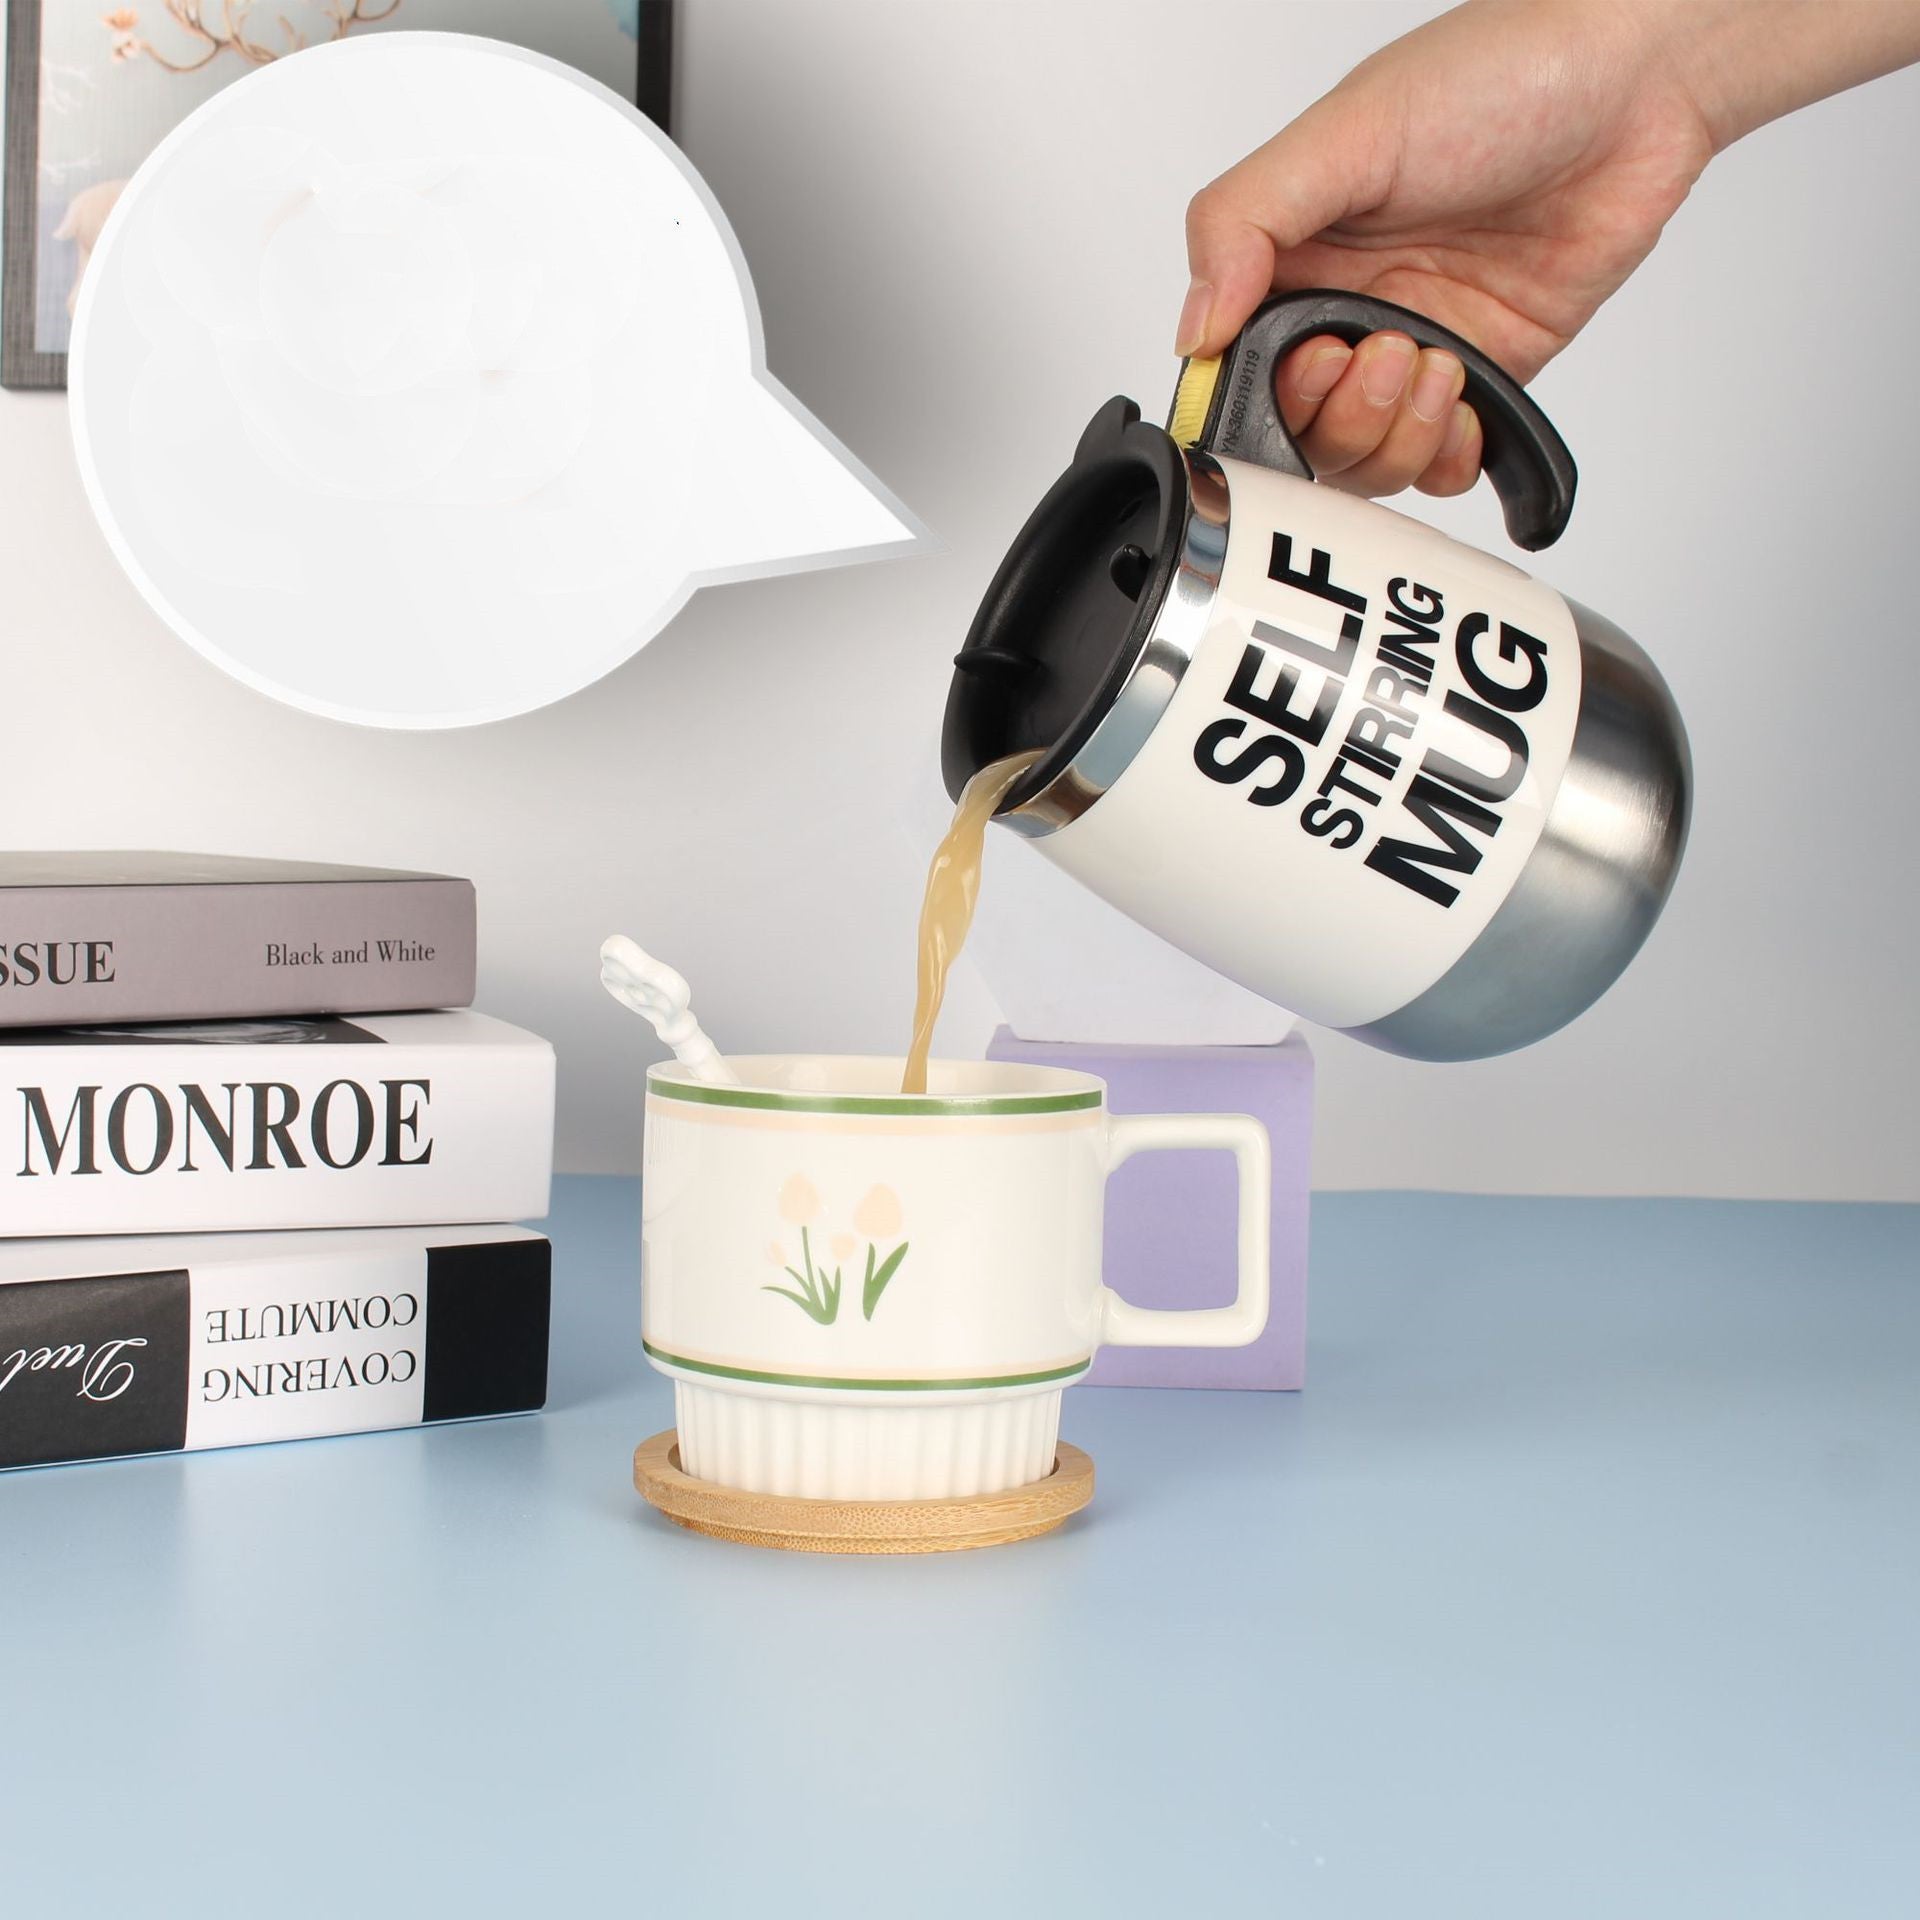 Automatic Self Stirring Coffee Mug - Everyday-Sales.com